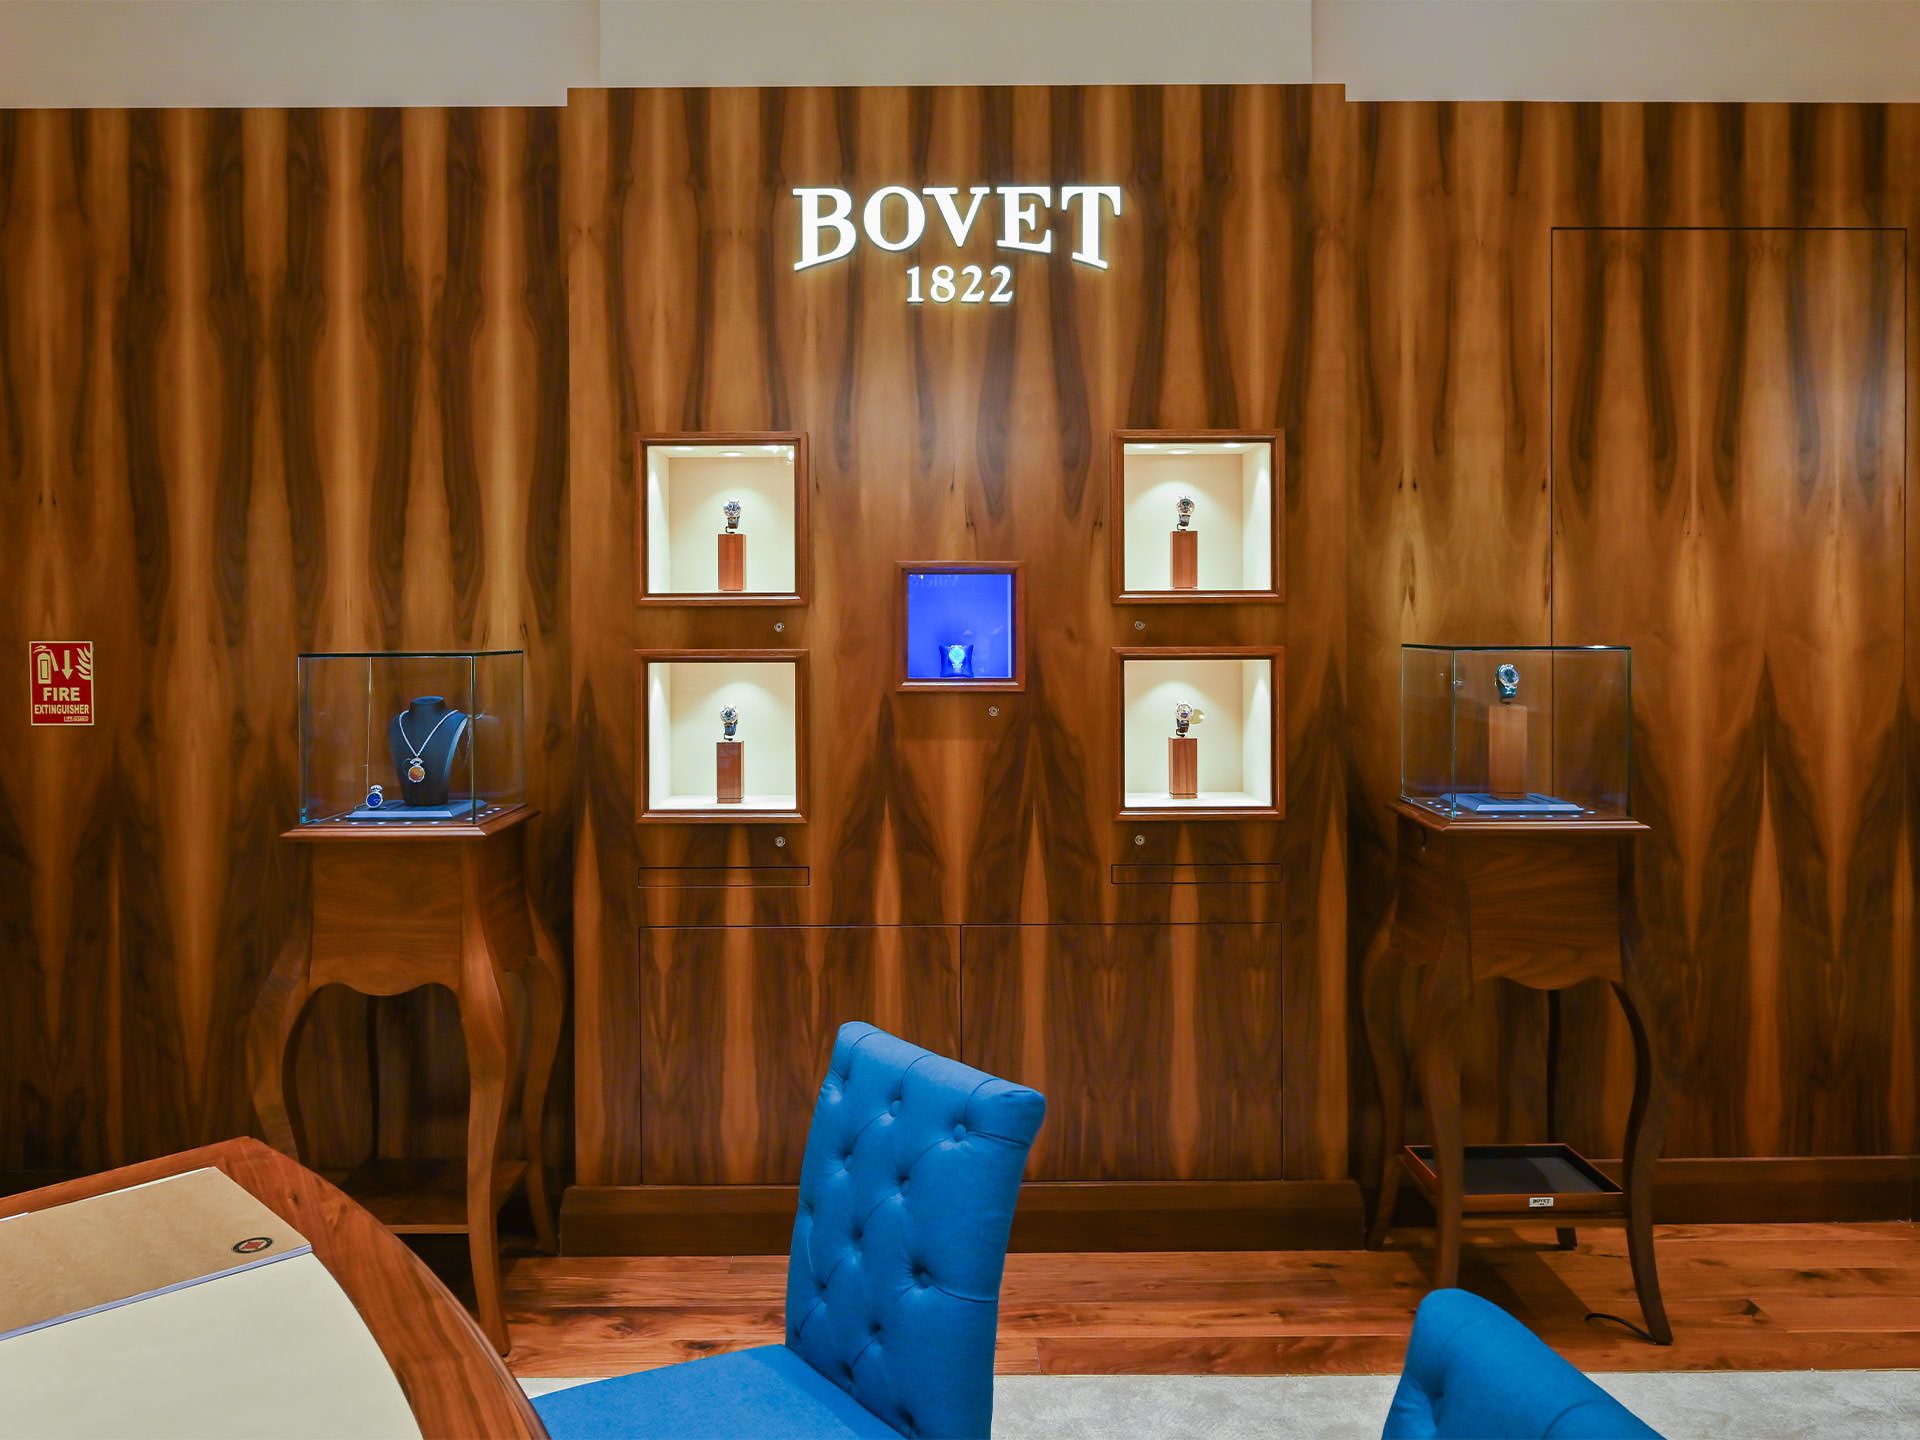 Bovet Boutique - Ethos Watches, New Delhi, Delhi